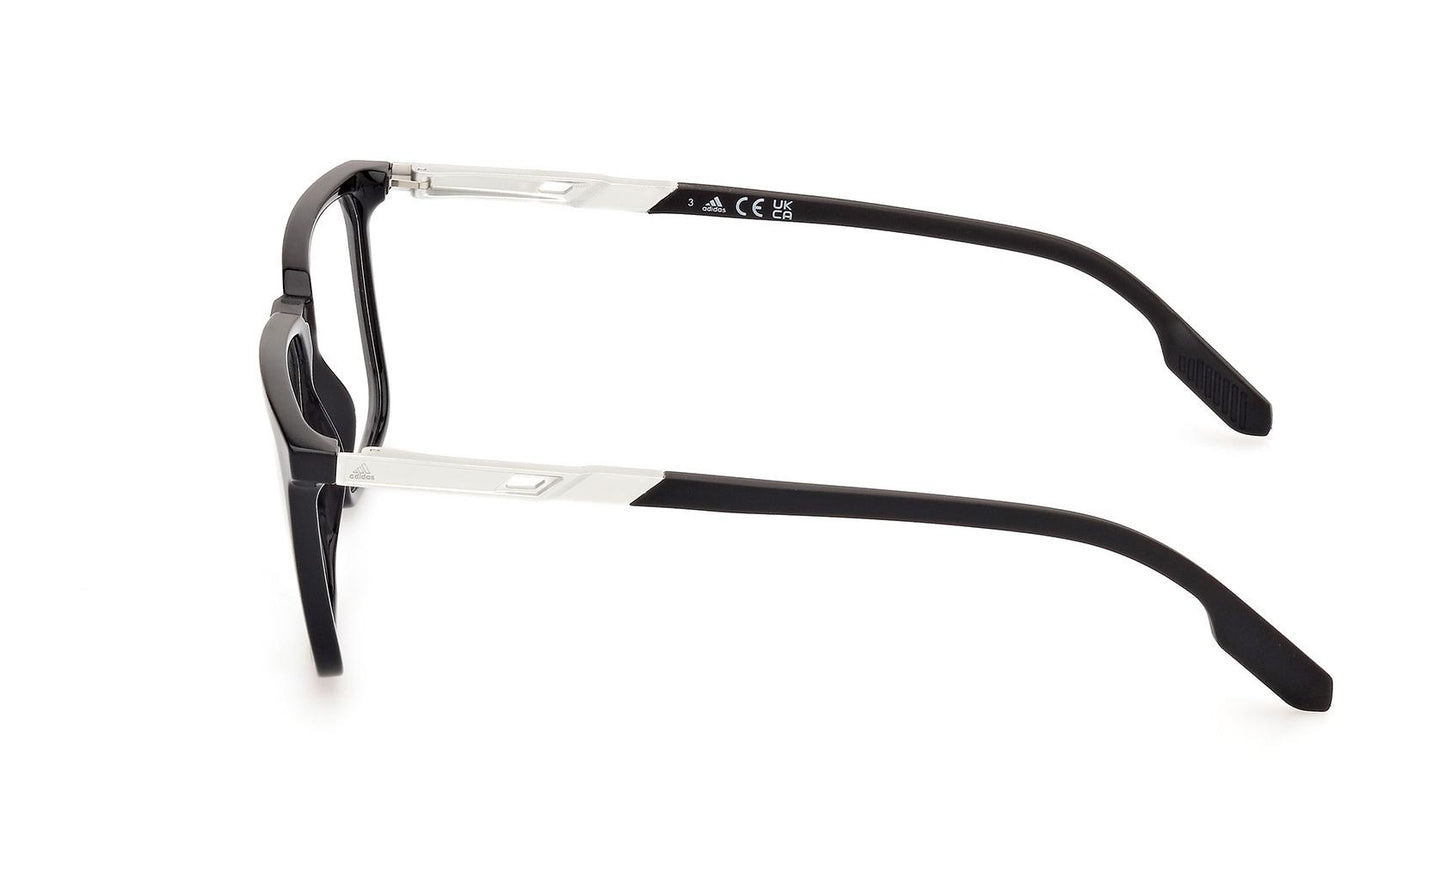 Adidas Sport Eyeglasses SP5071 001